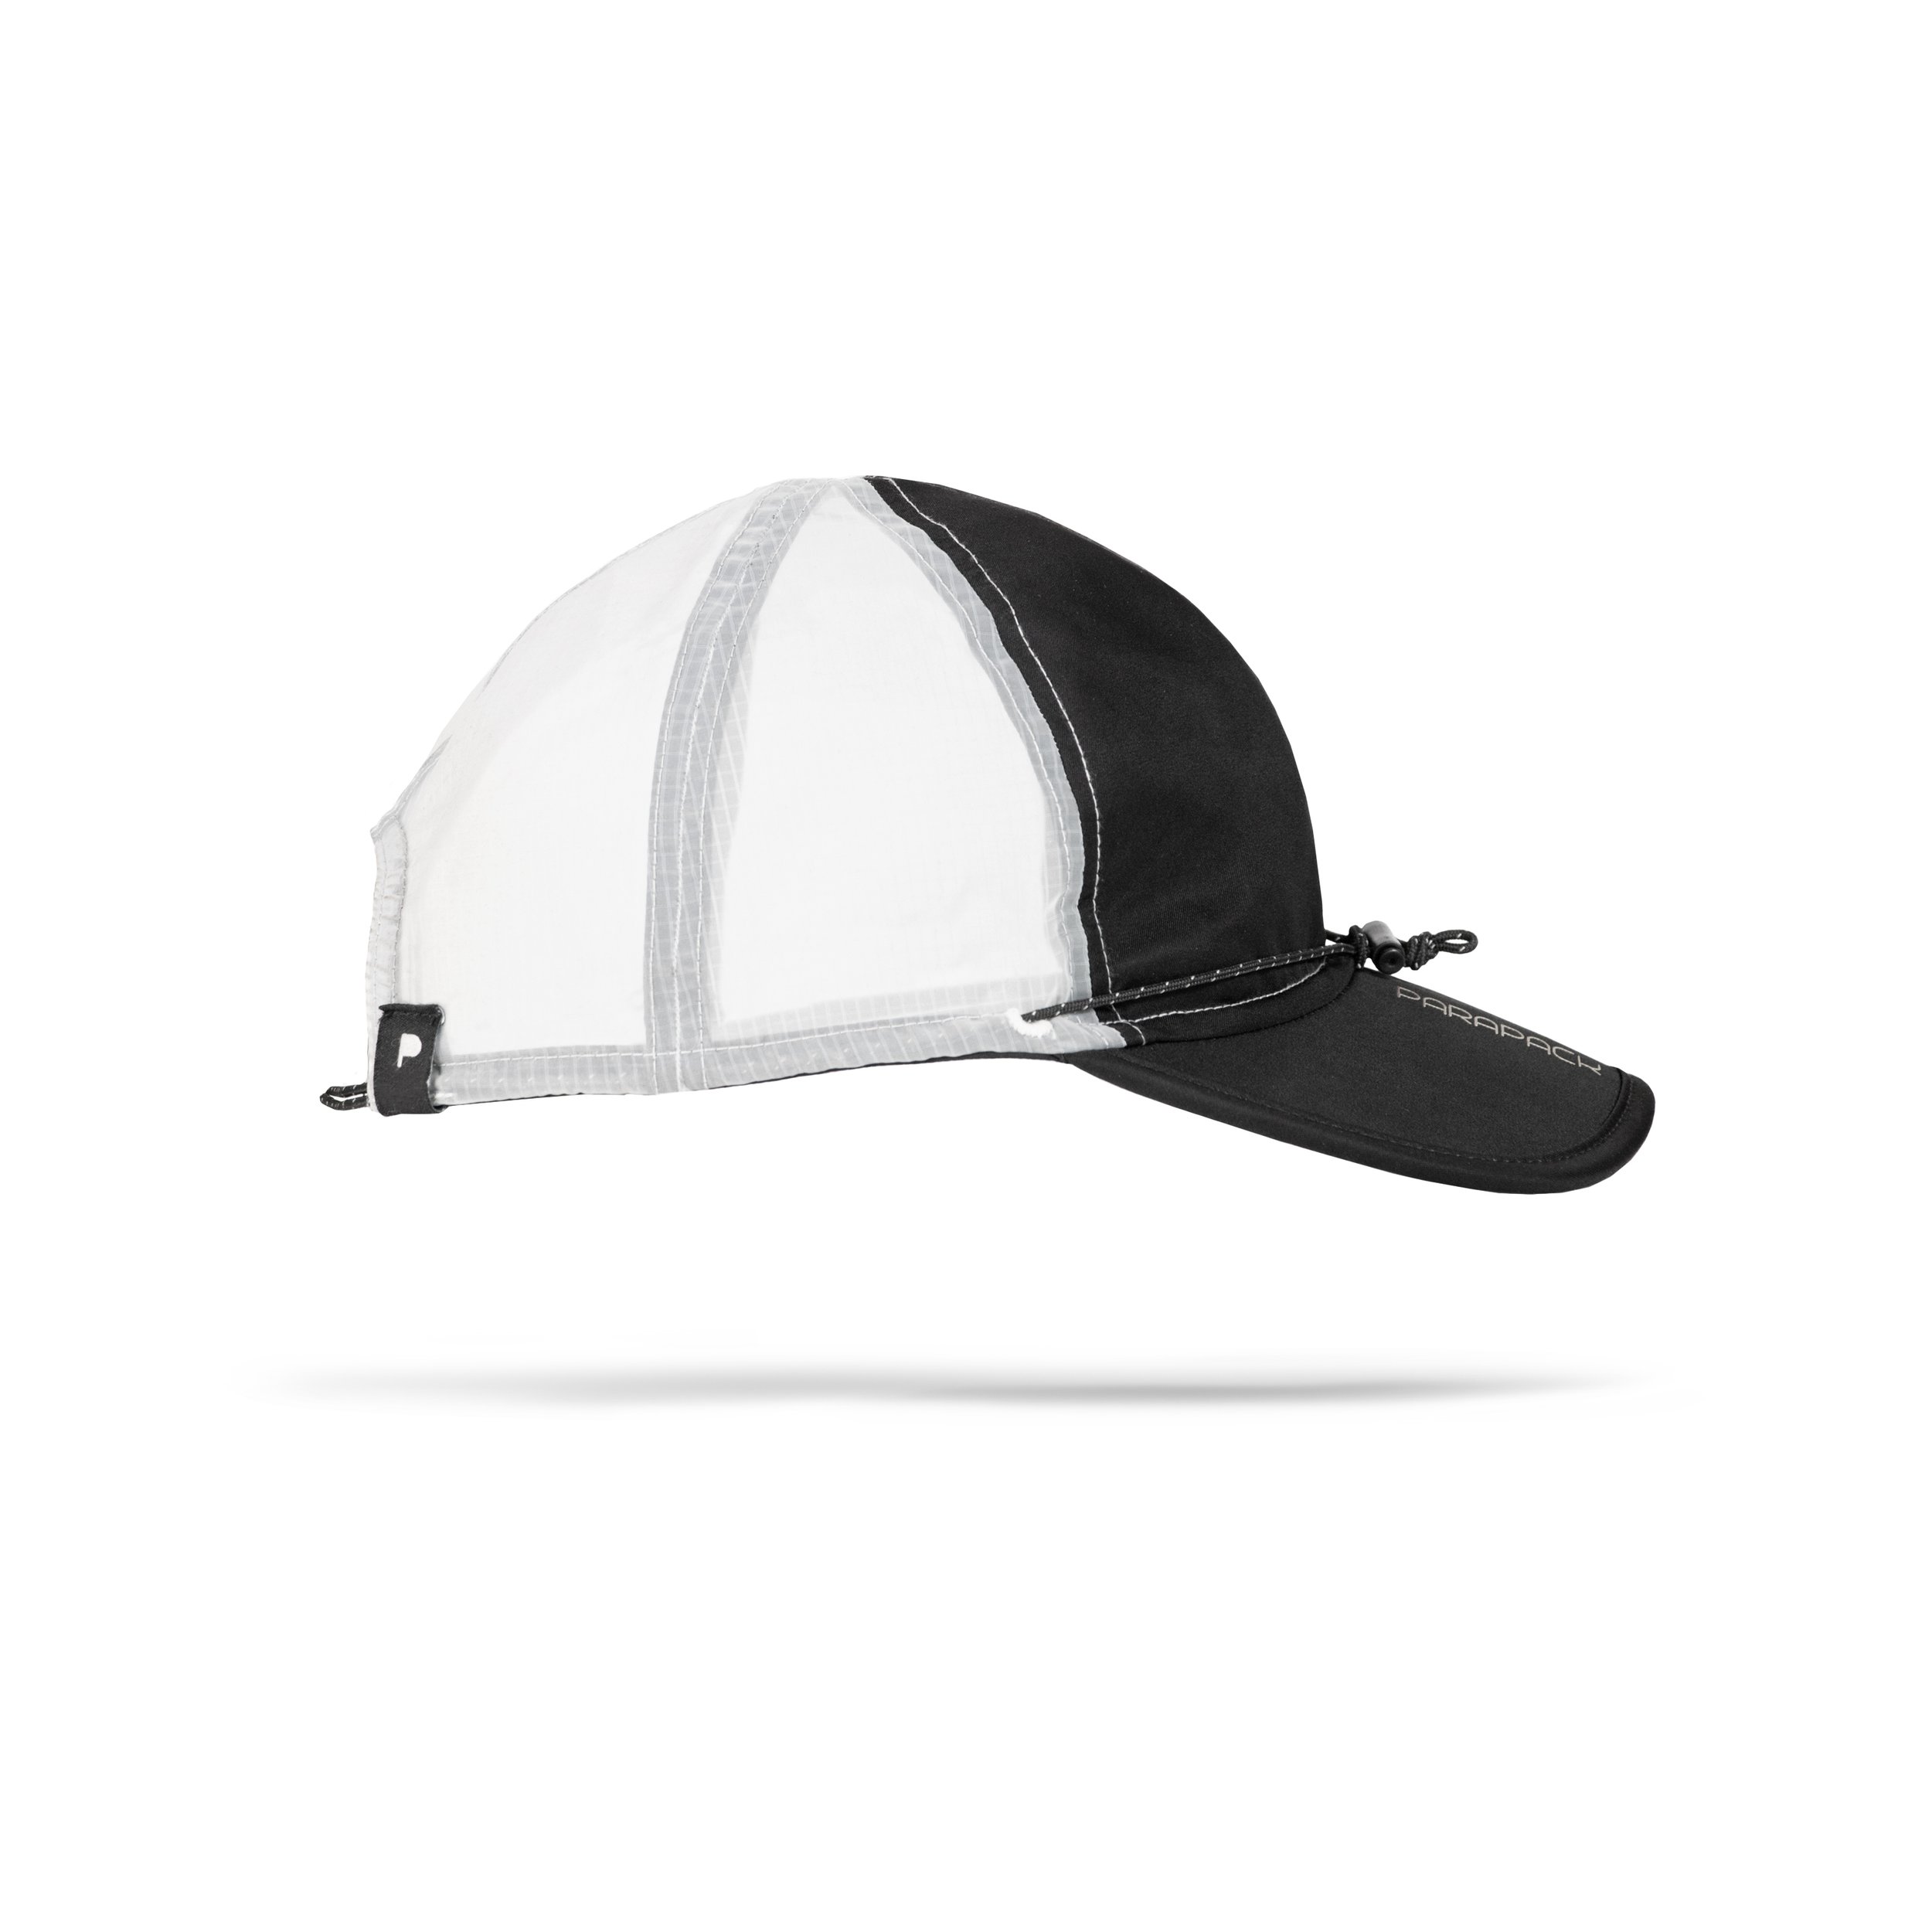 Parapack P-Cap Lite | Ultra-lightweight packable headwear for all